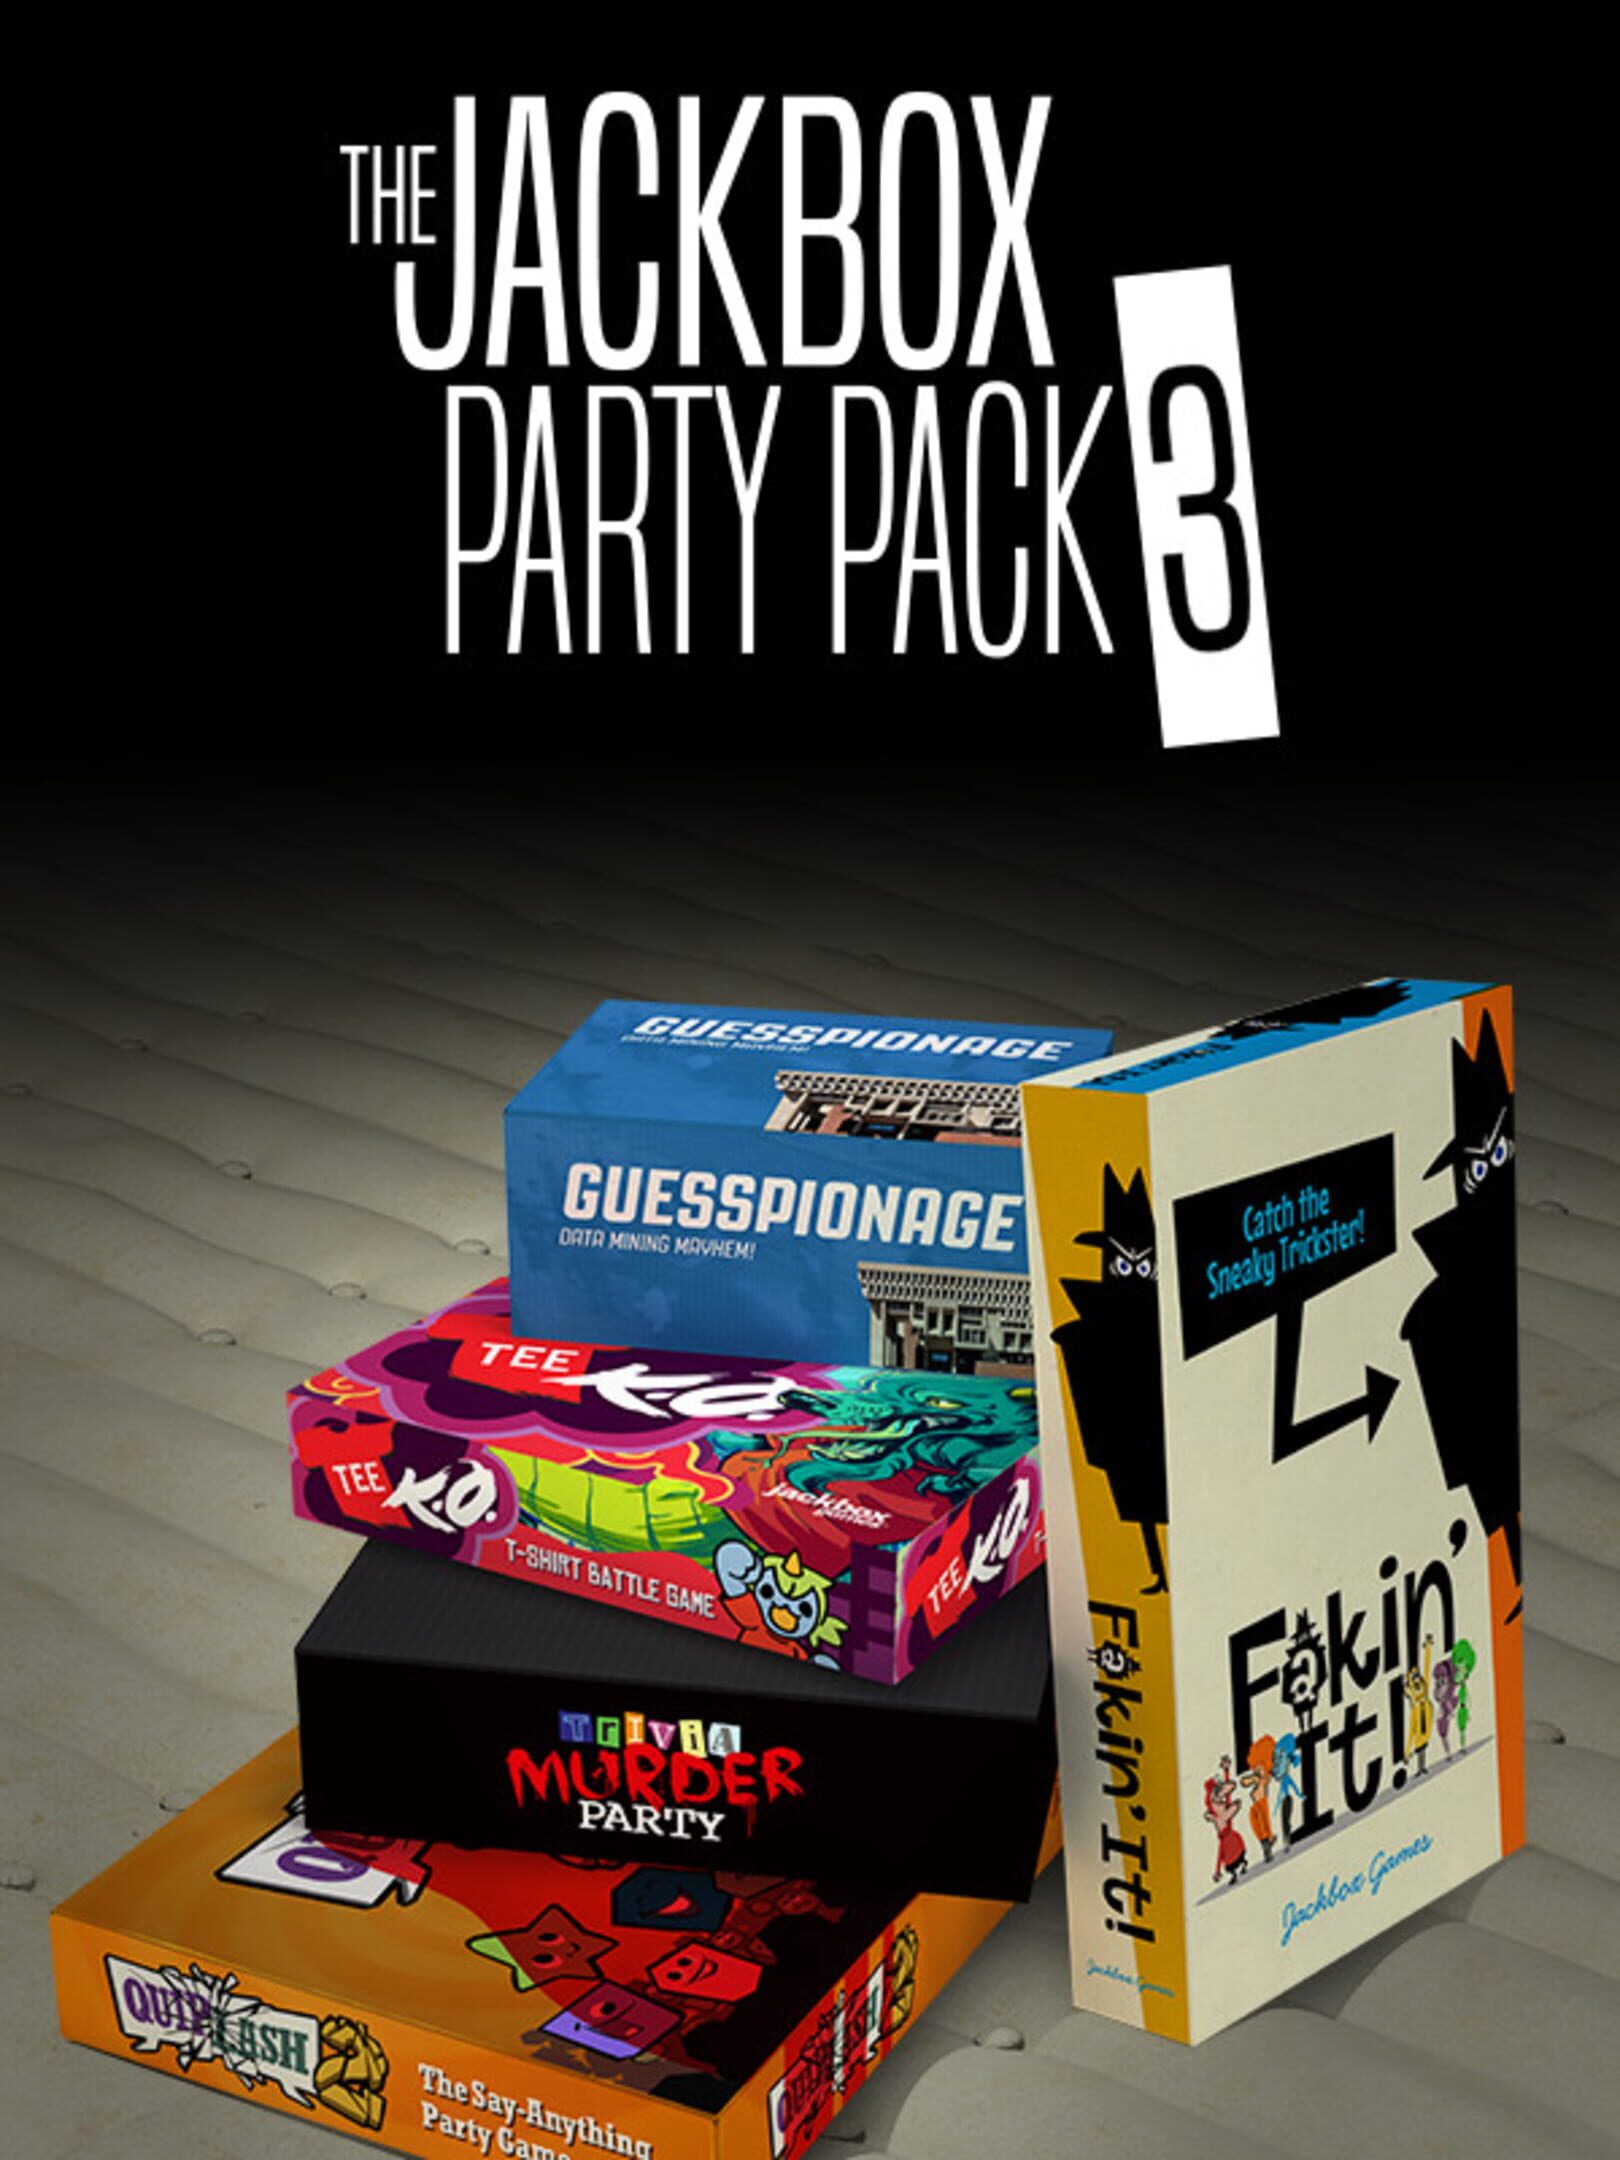 Jackbox party game